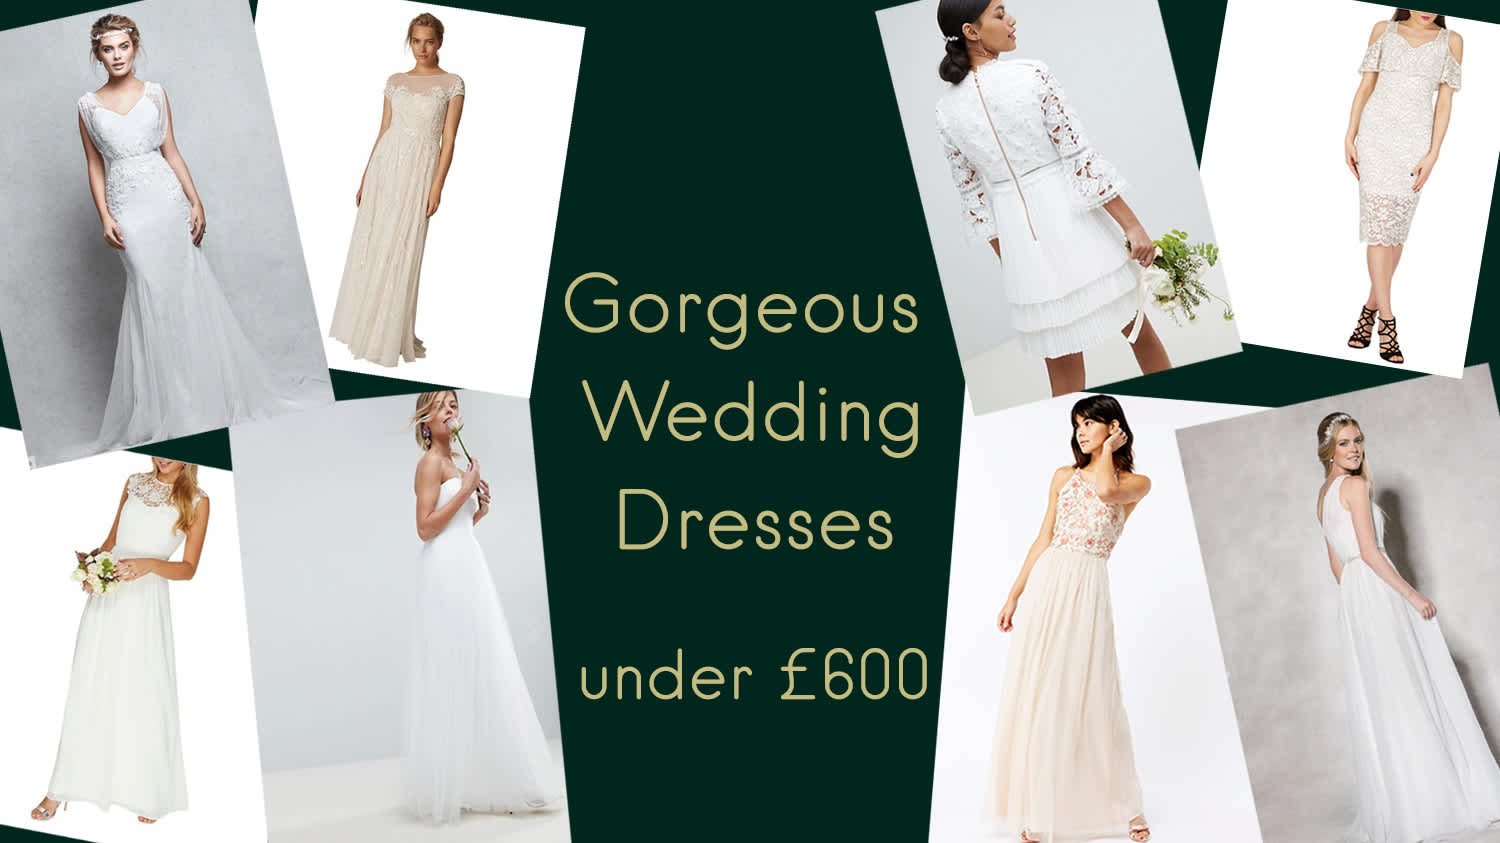 Gorgeous Wedding Dresses under £600